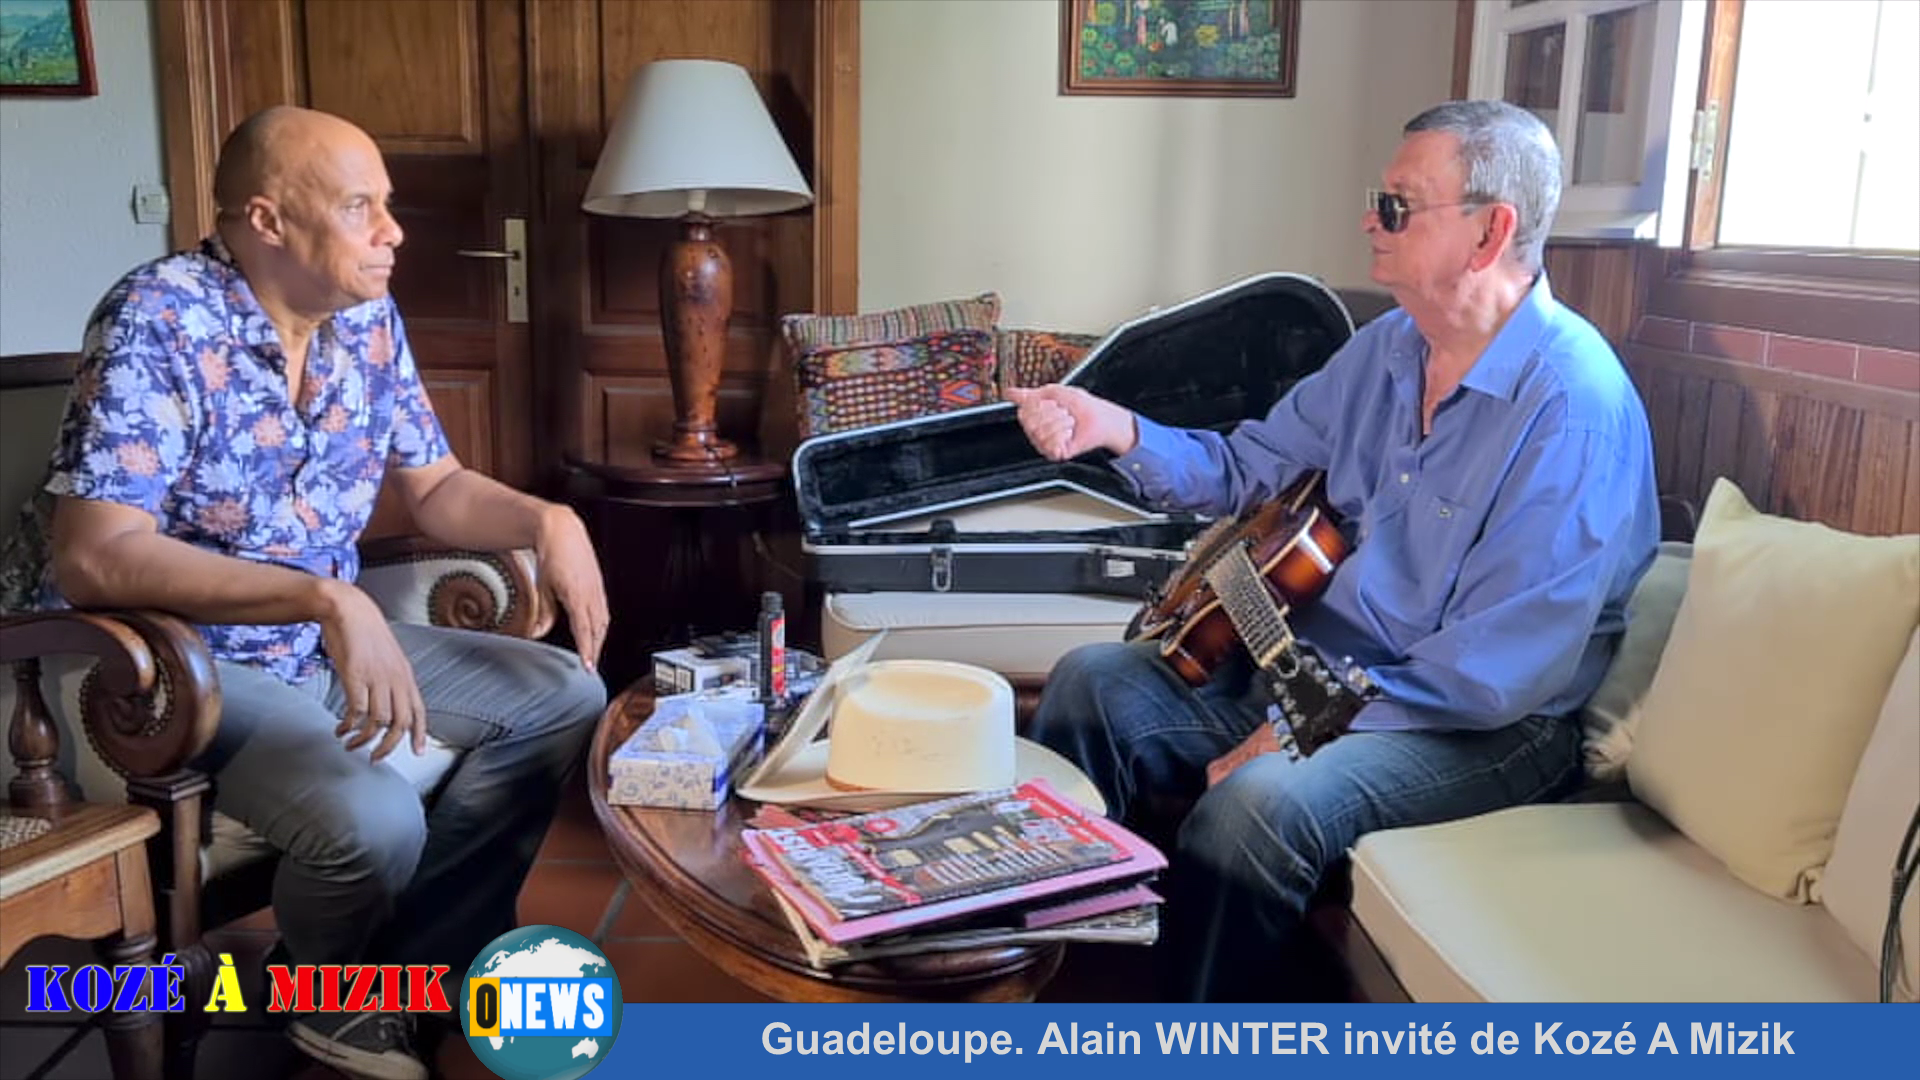 [Vidéo] Onews Guadeloupe. Alain WINTER invité de Kozé A Mizik